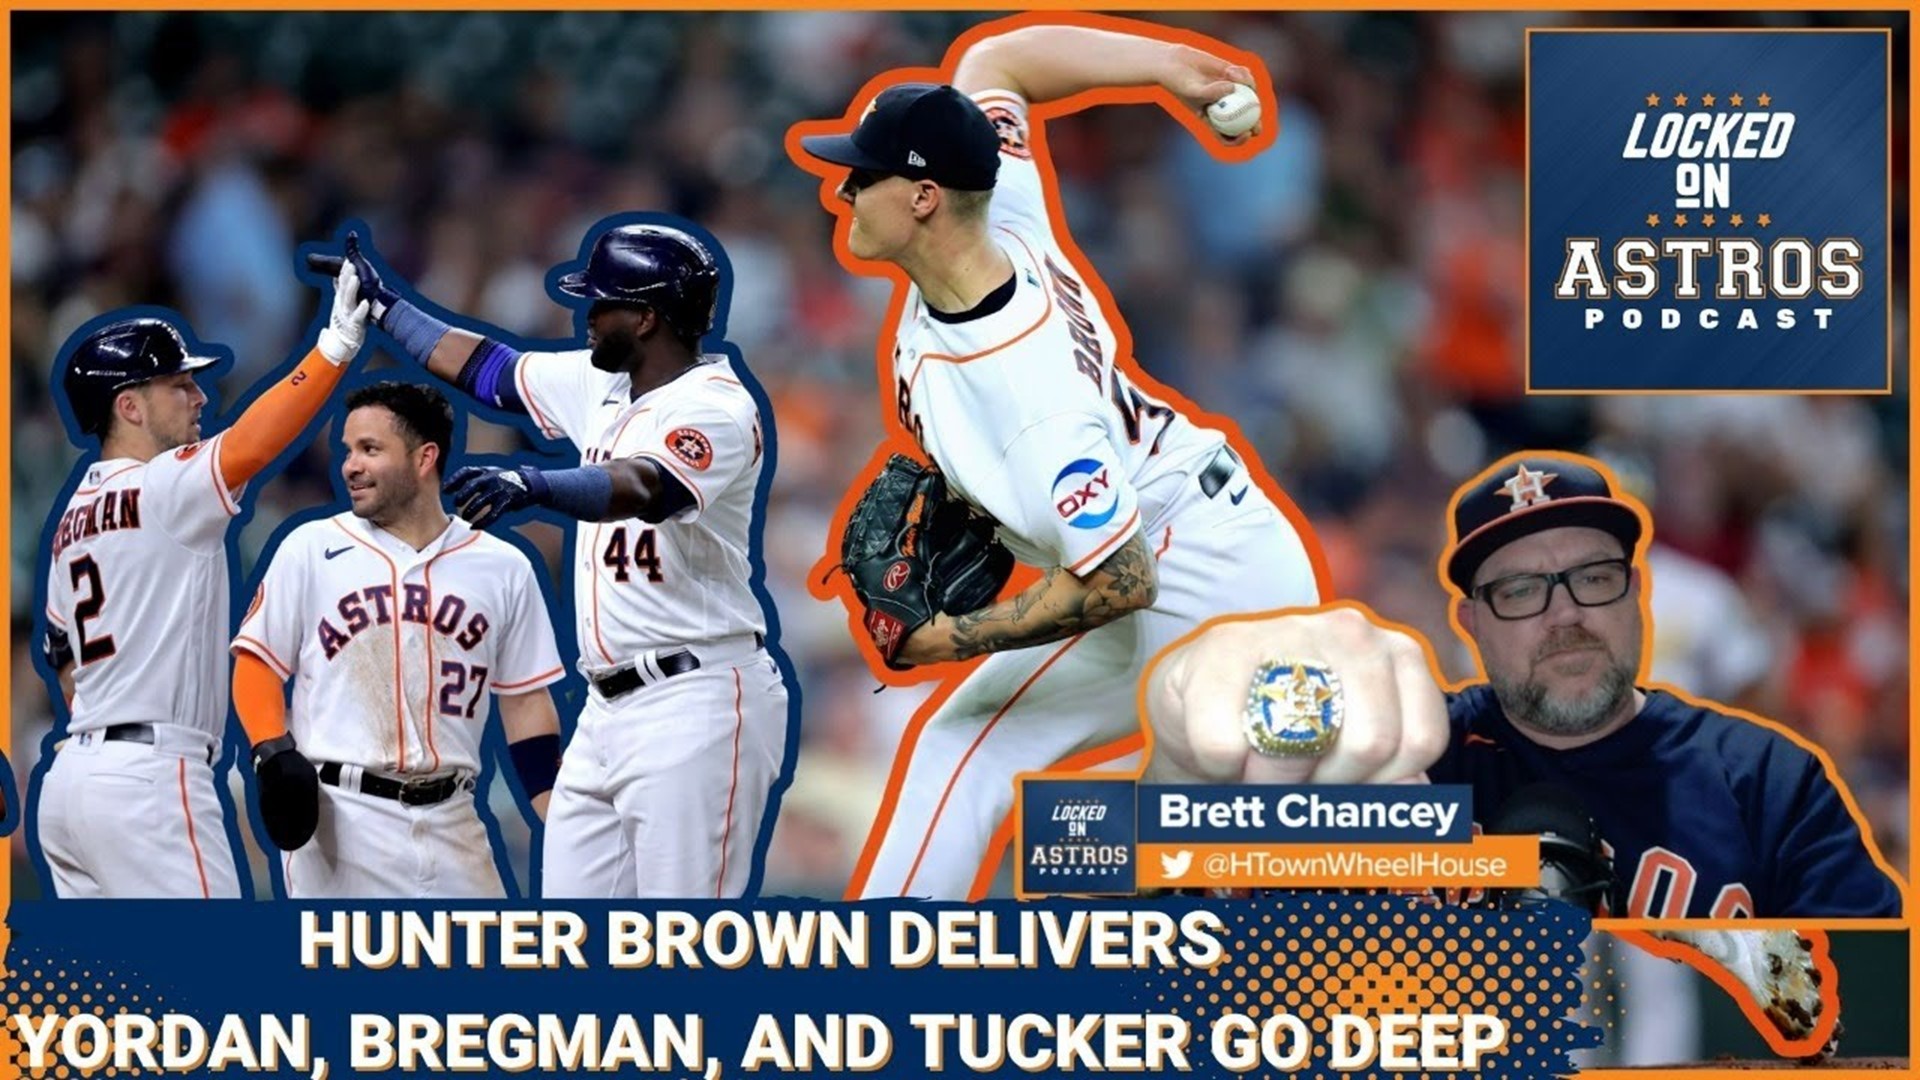 Astros: Hunter Brown Delivers as Yordan, Bregman and Tucker Go Deep